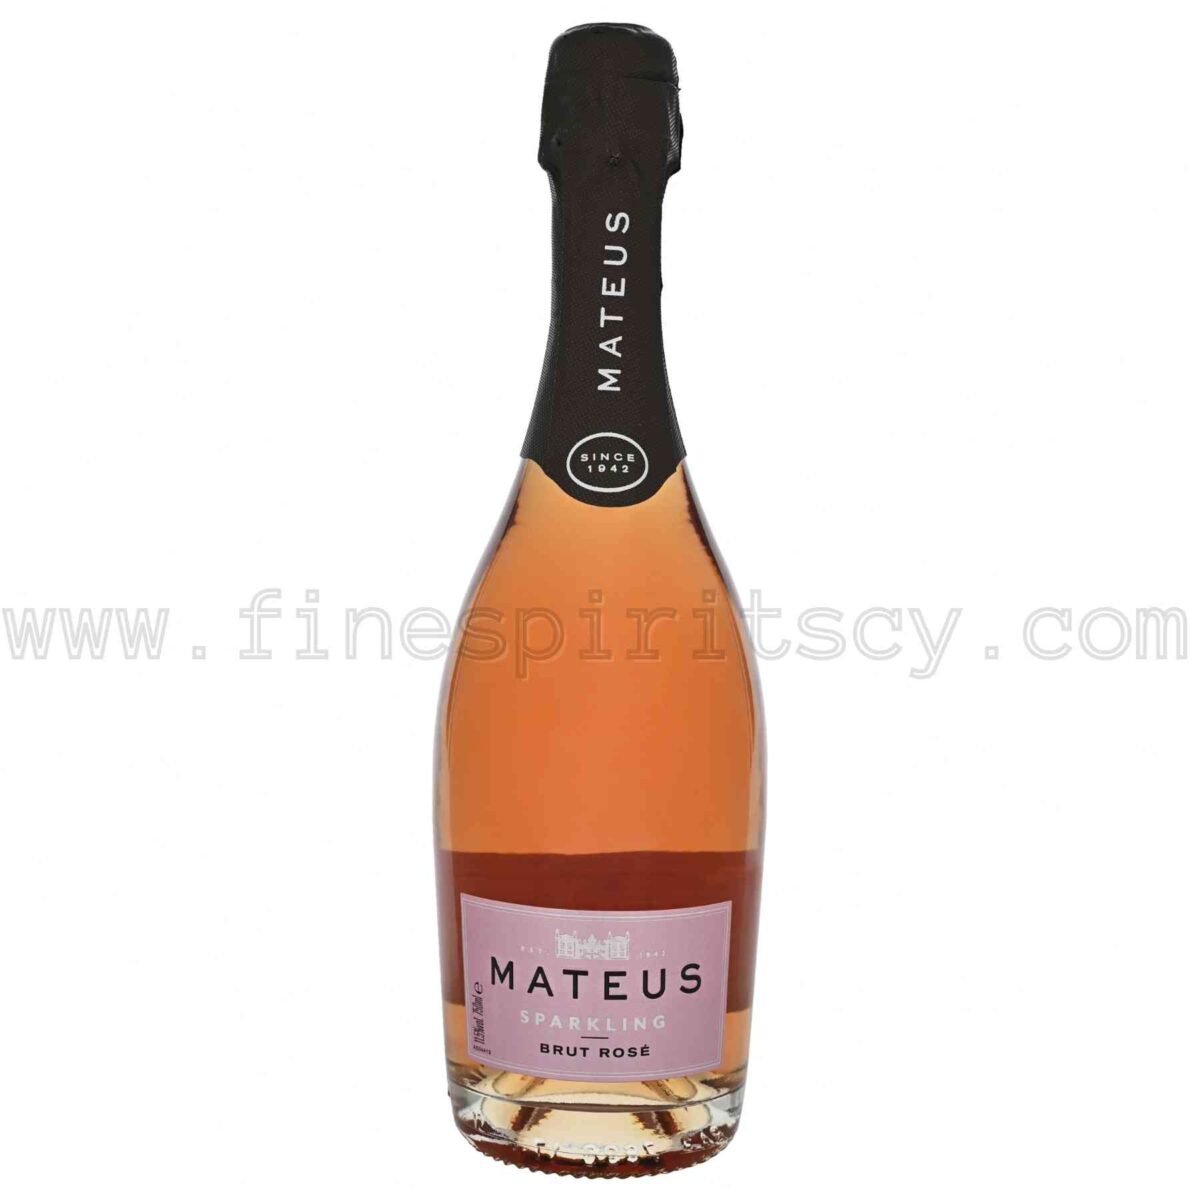 Mateus Sparkling Brut Rose Wine 750ml 75cl 0.75L